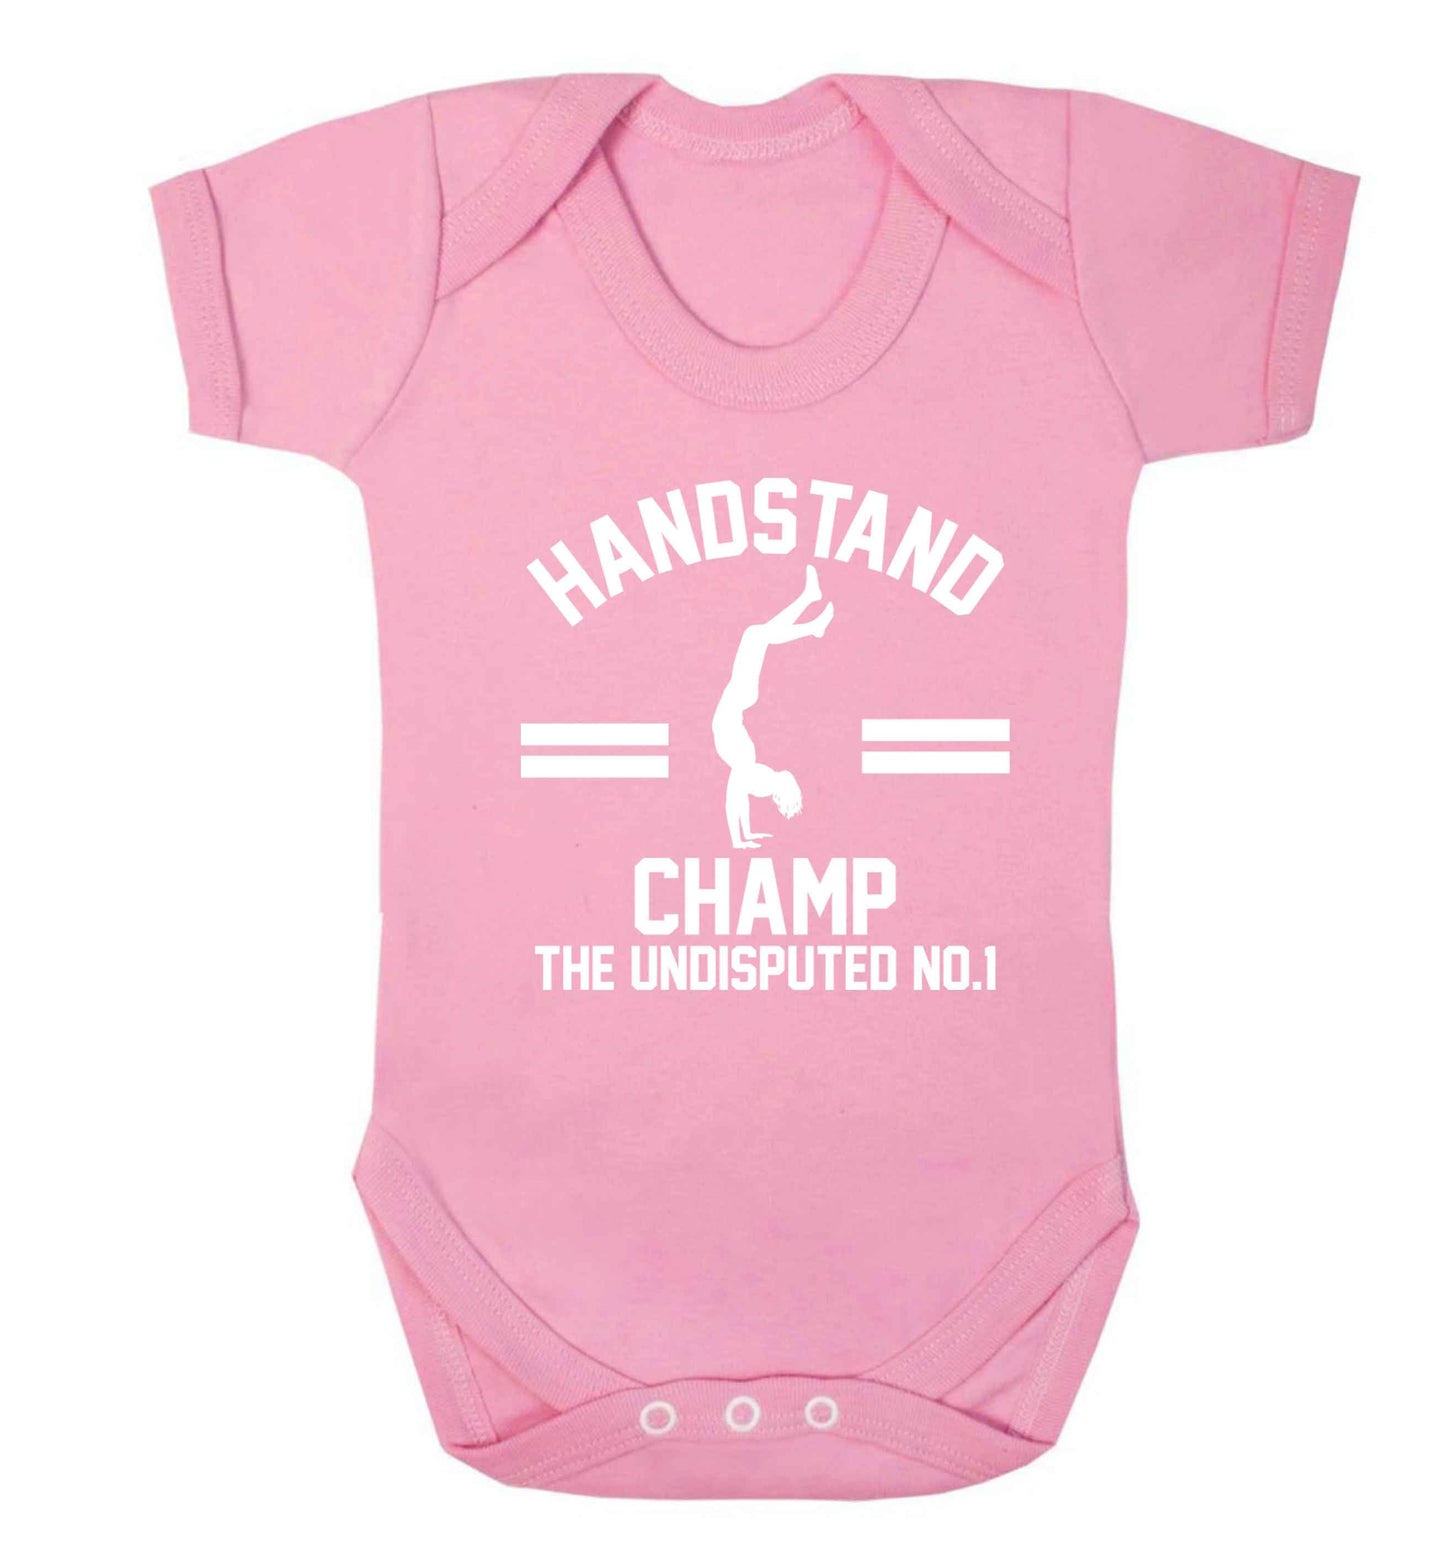 Undisputed handstand championship no.1  Baby Vest pale pink 18-24 months